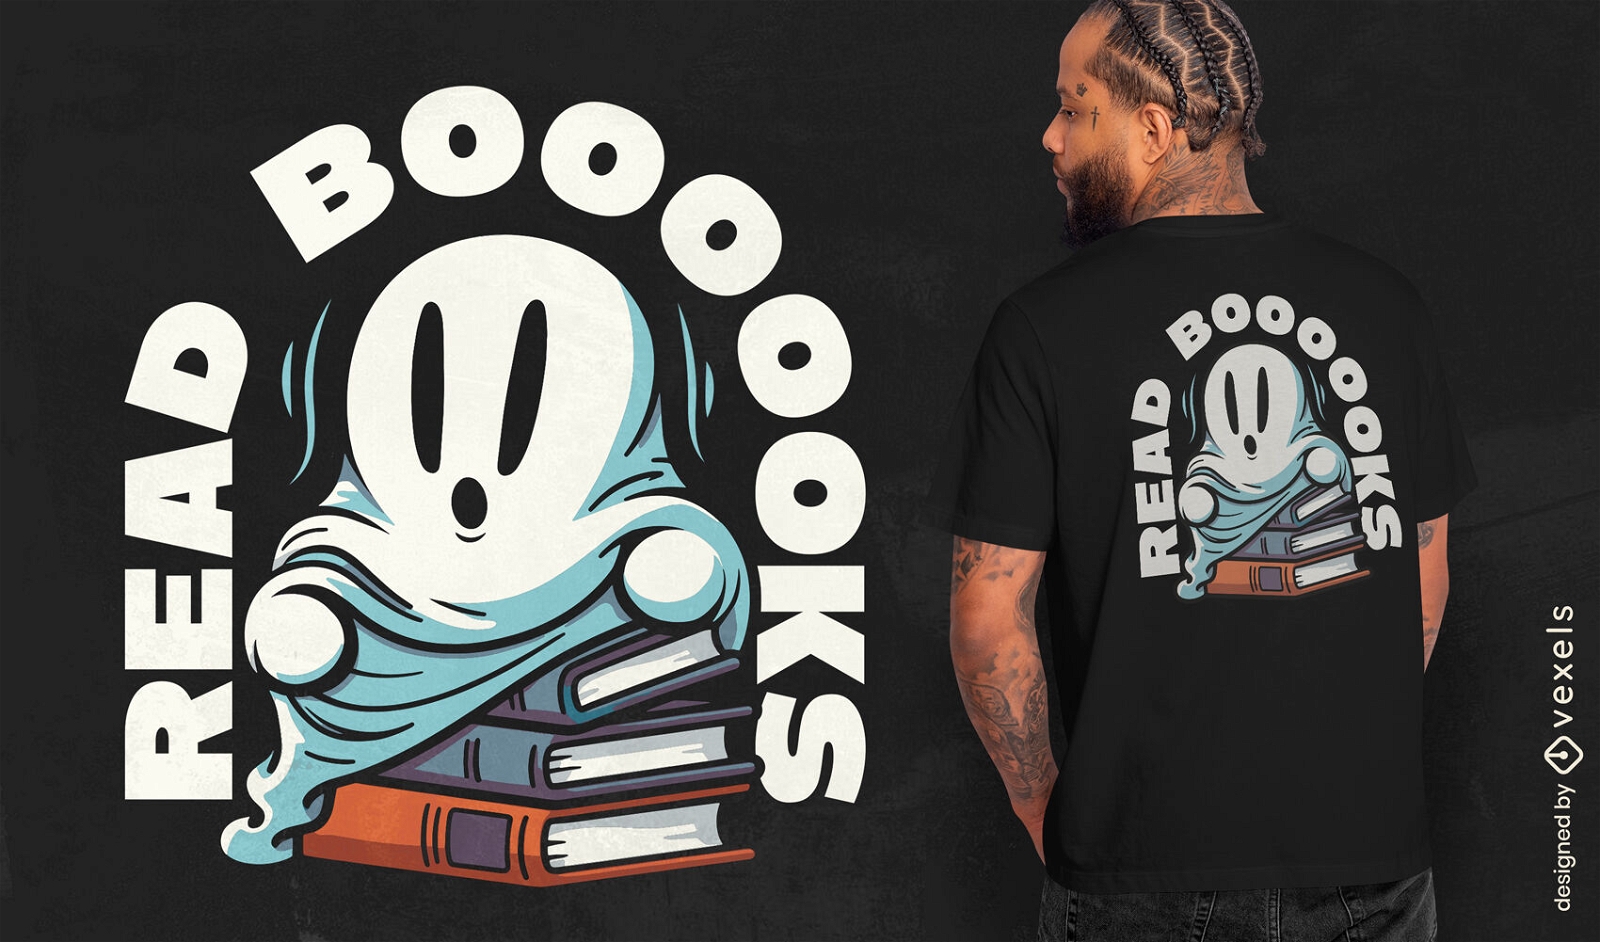 Ghost reading books t-shirt design